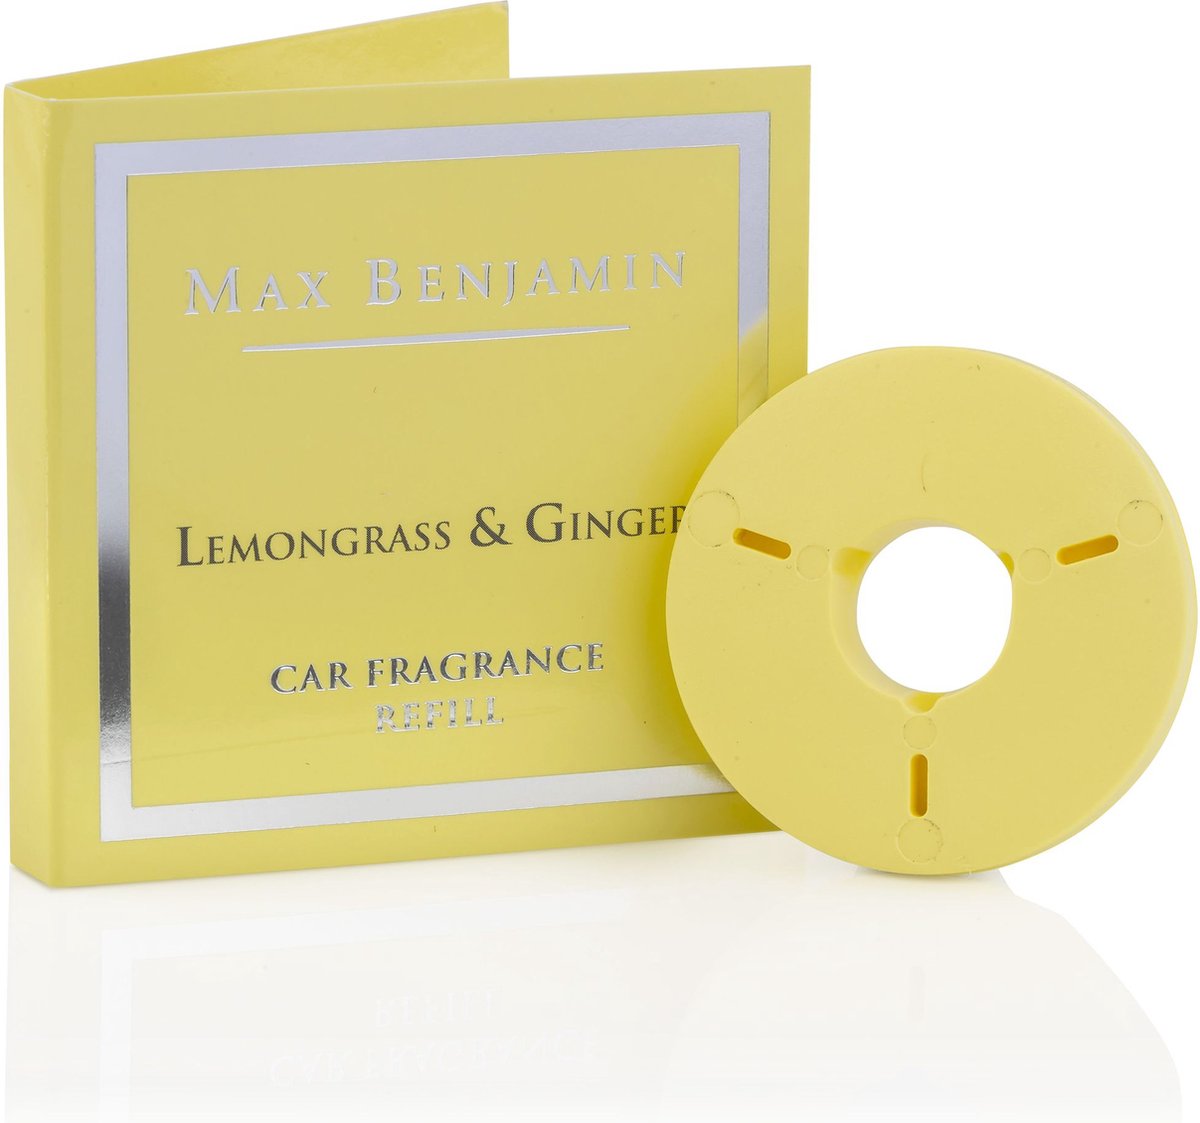 Max Benjamin - Classic Autoparfum Navulling Lemongrass & Ginger